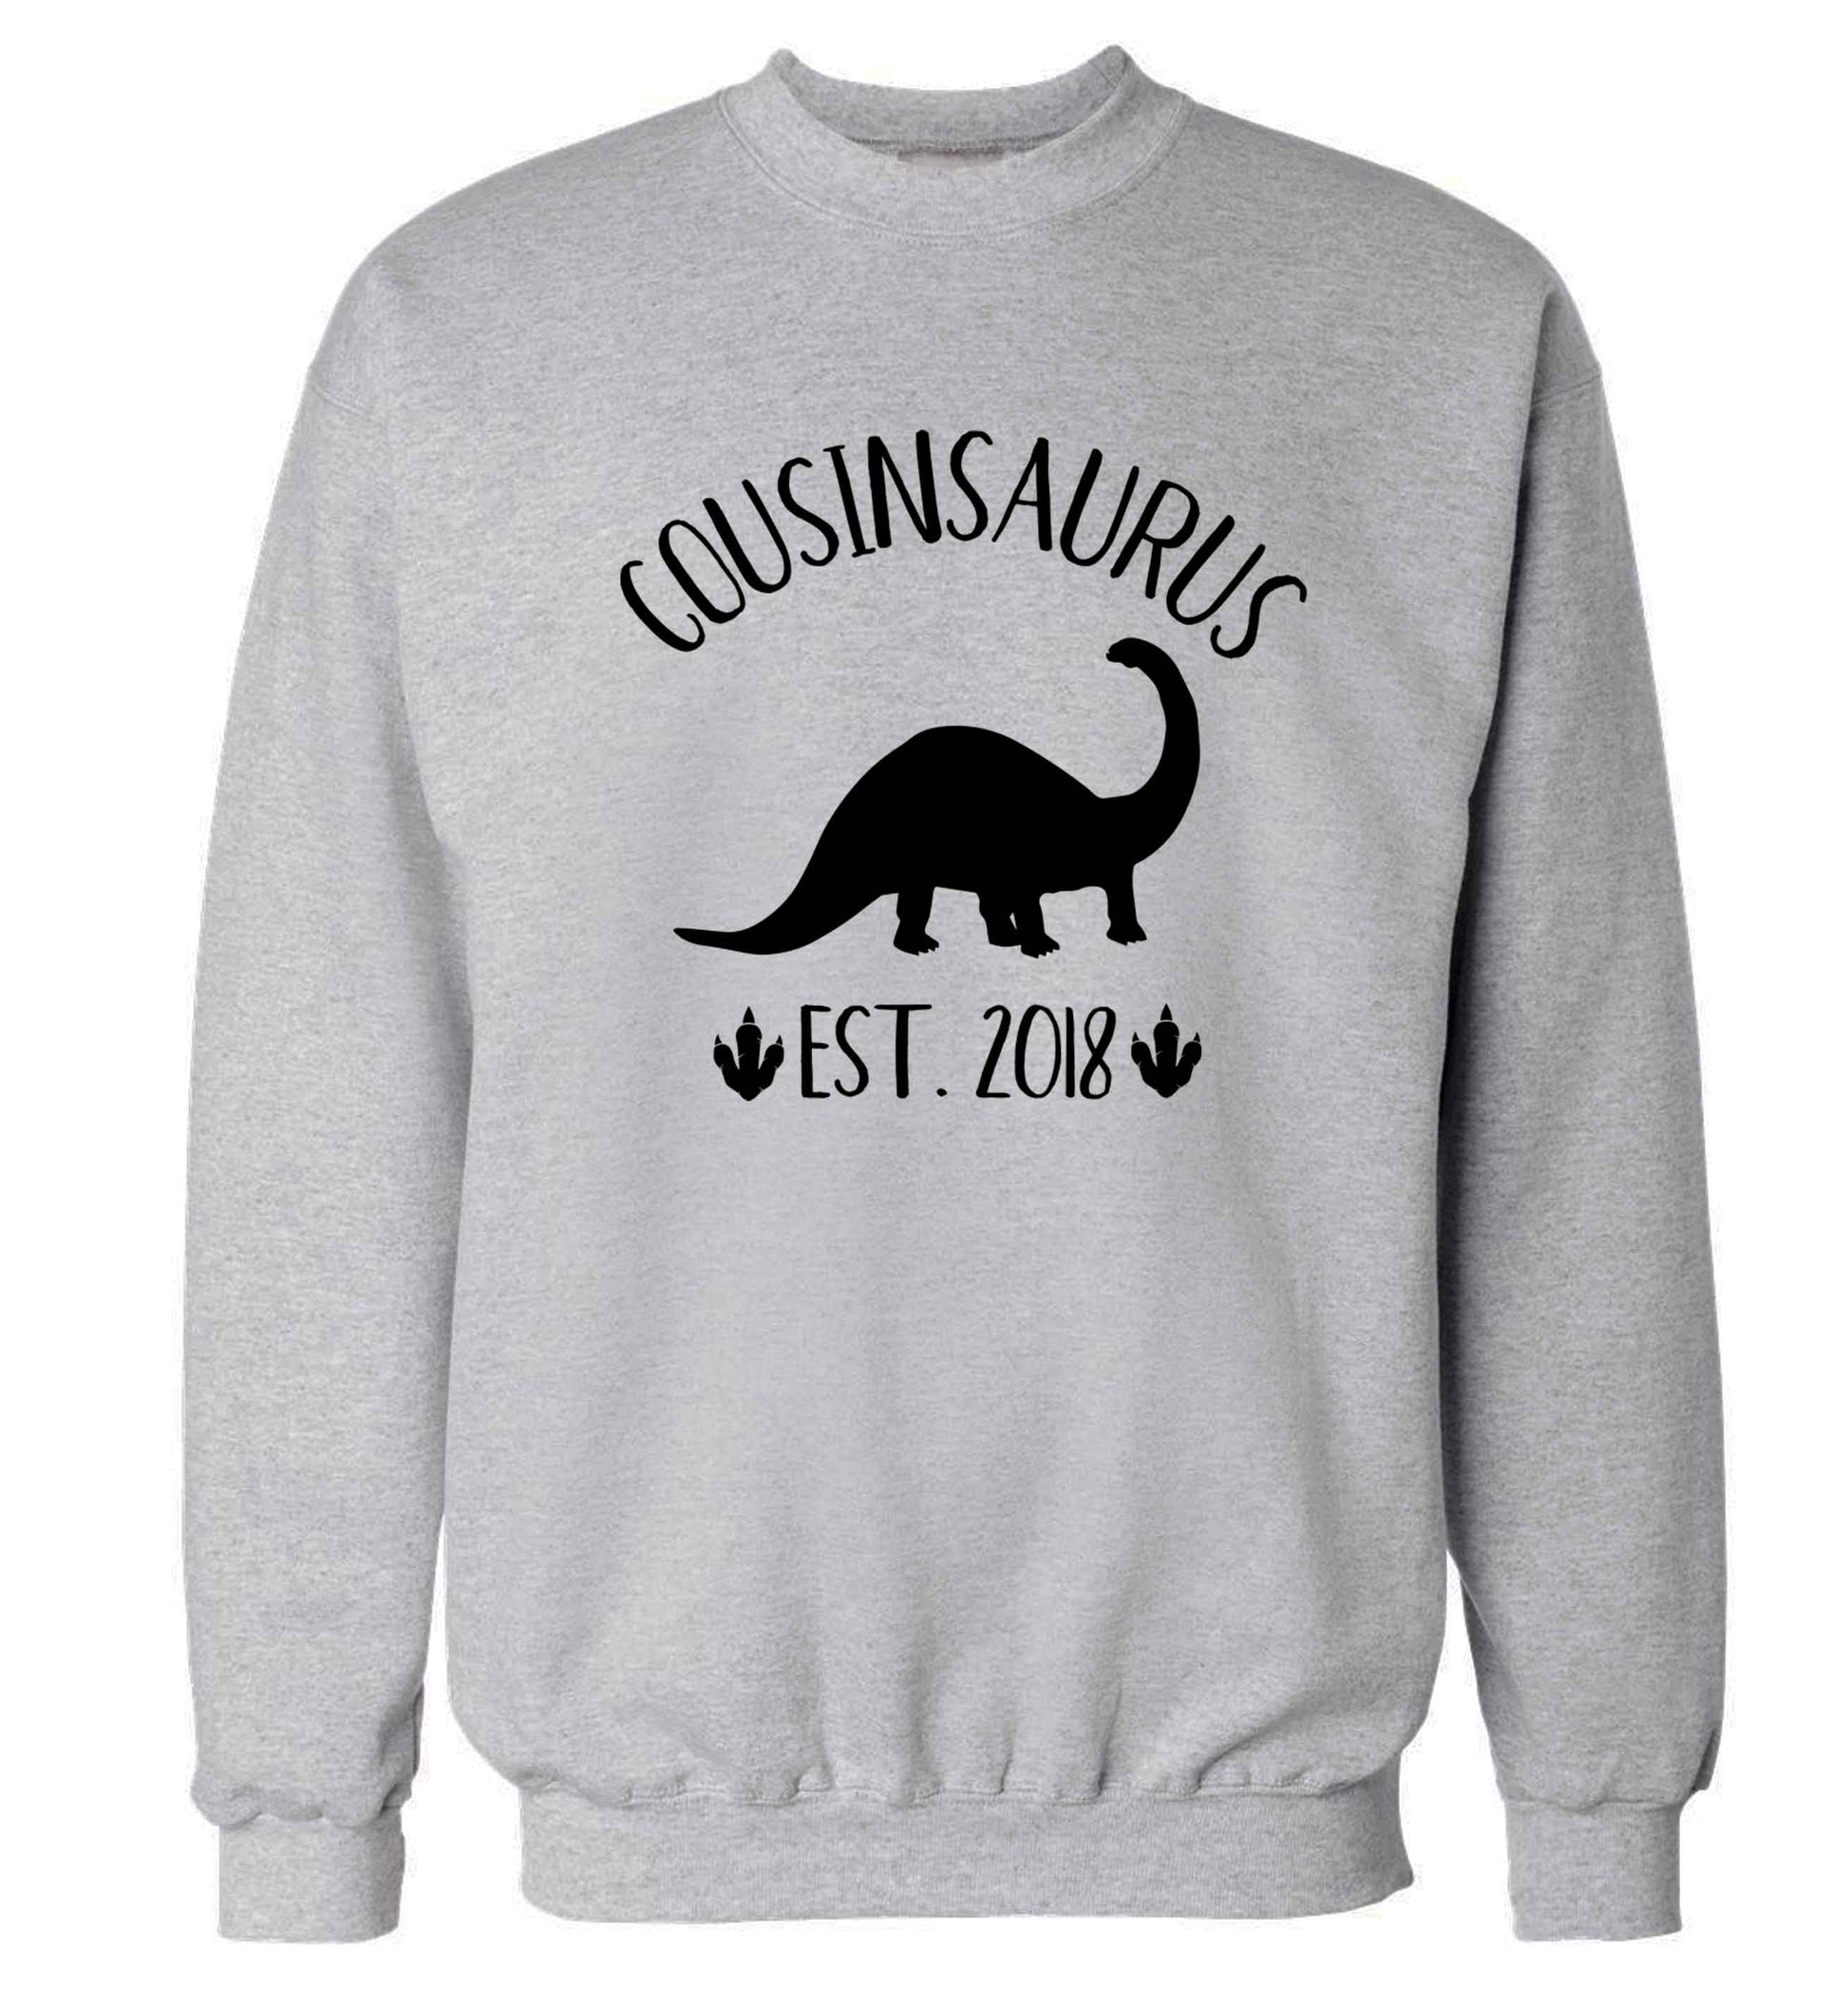 Personalised cousinsaurus since (custom date) Adult's unisex grey Sweater 2XL